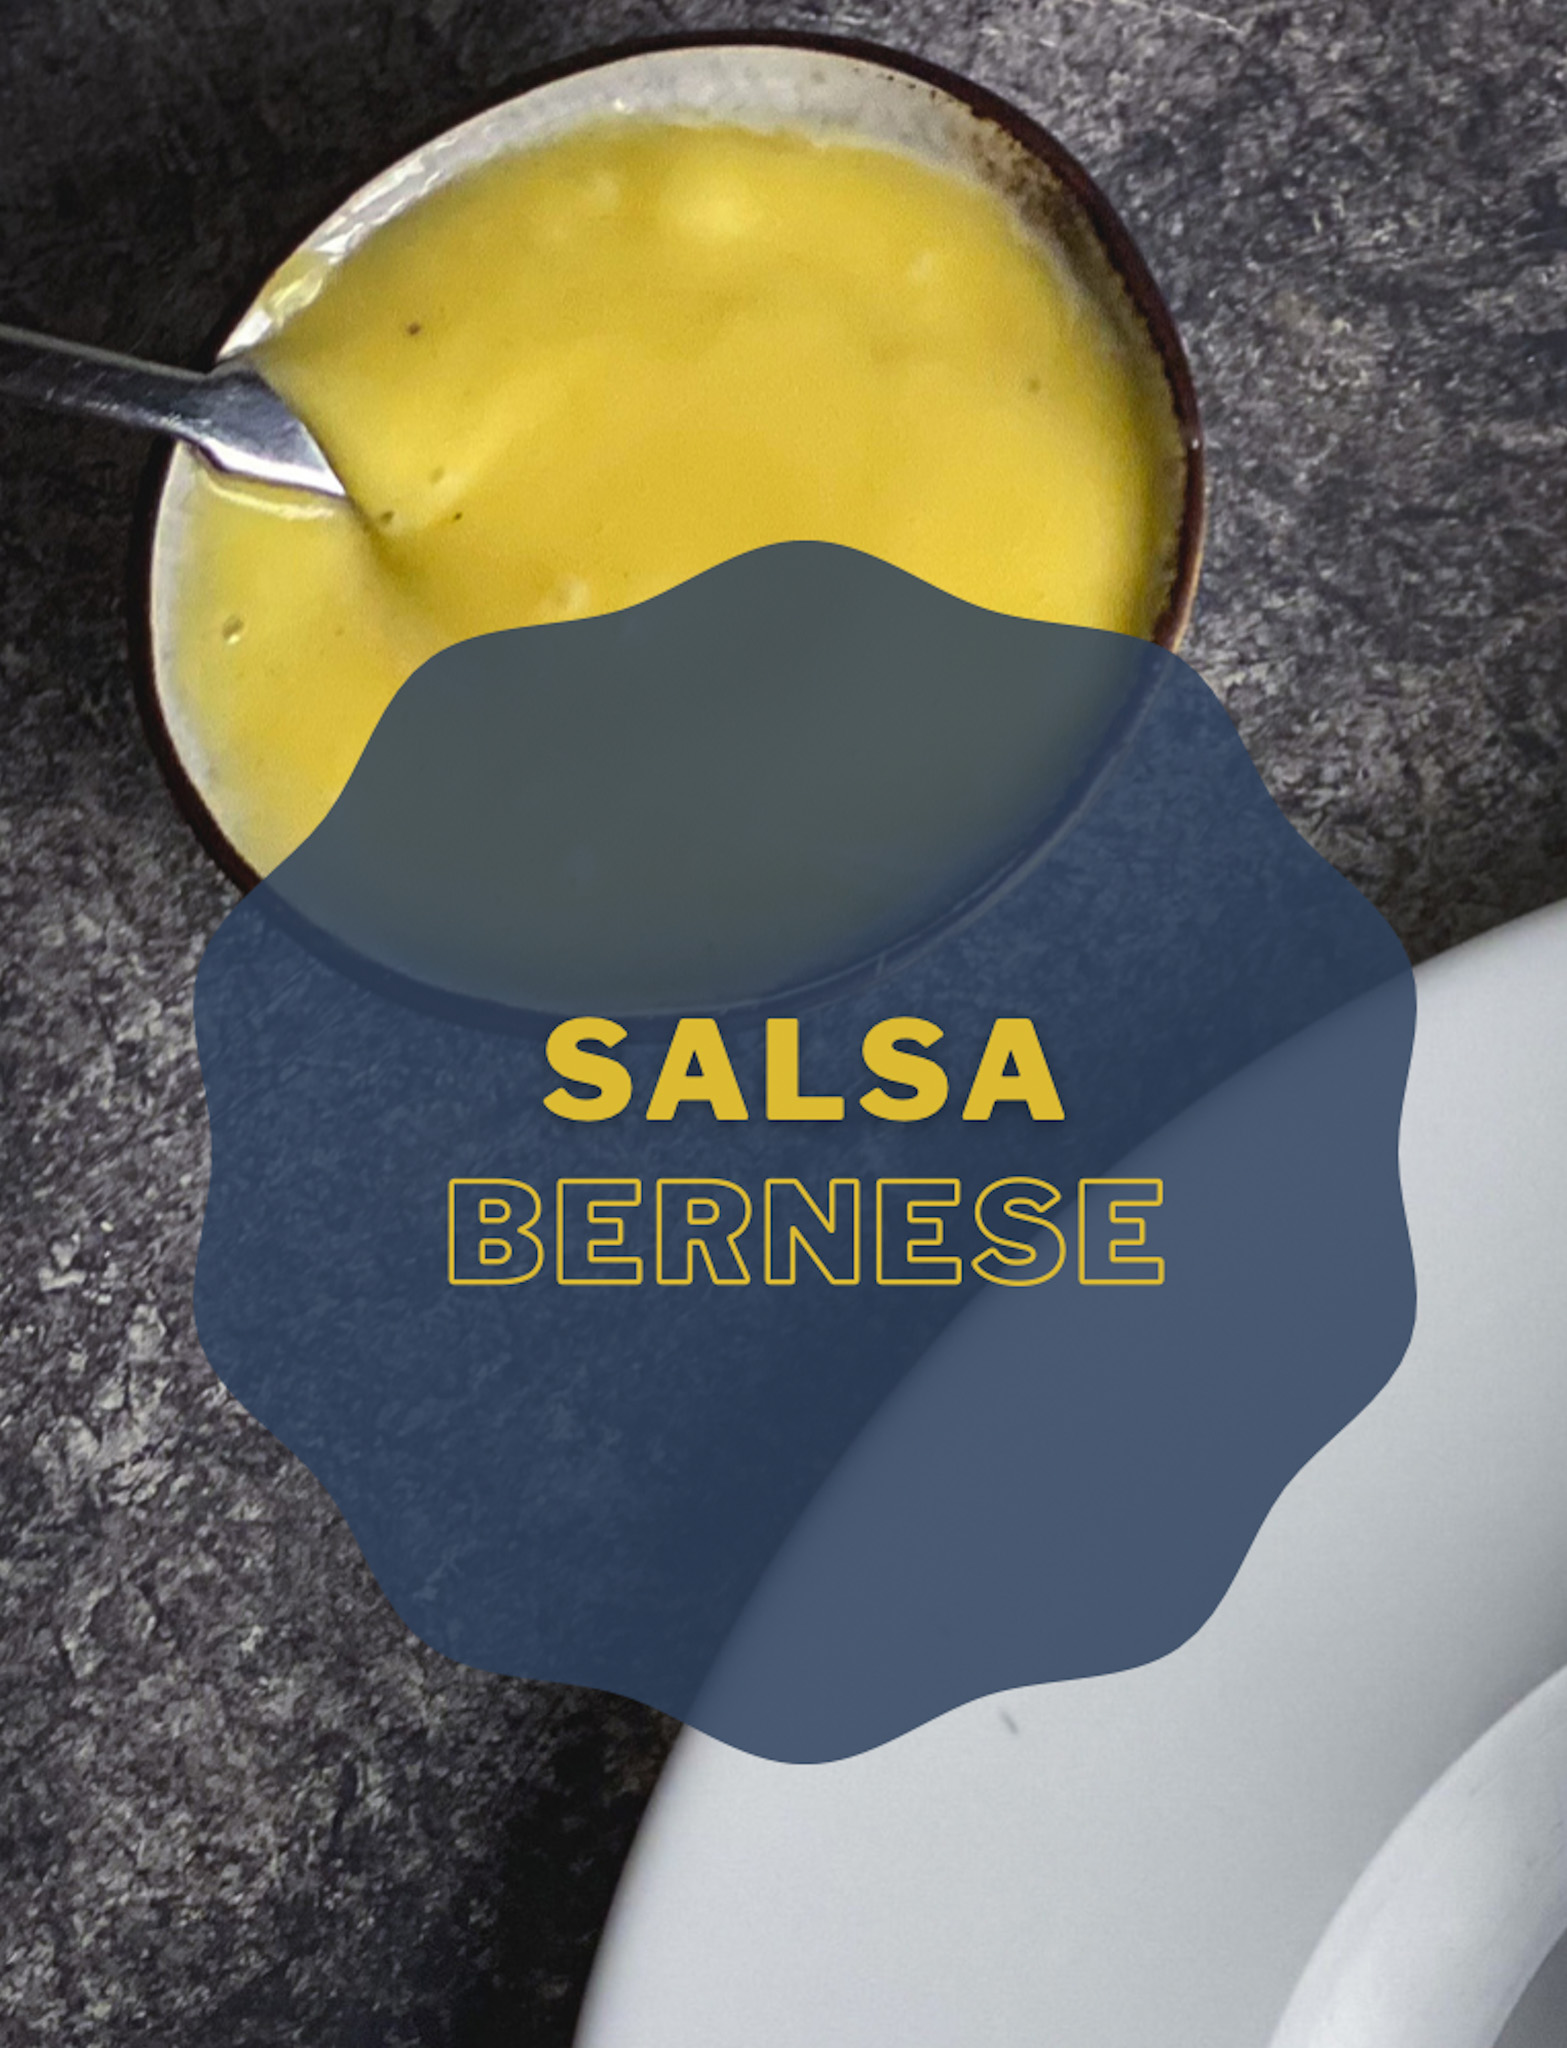 Salsa bernese: patrimonio gastronomico francese